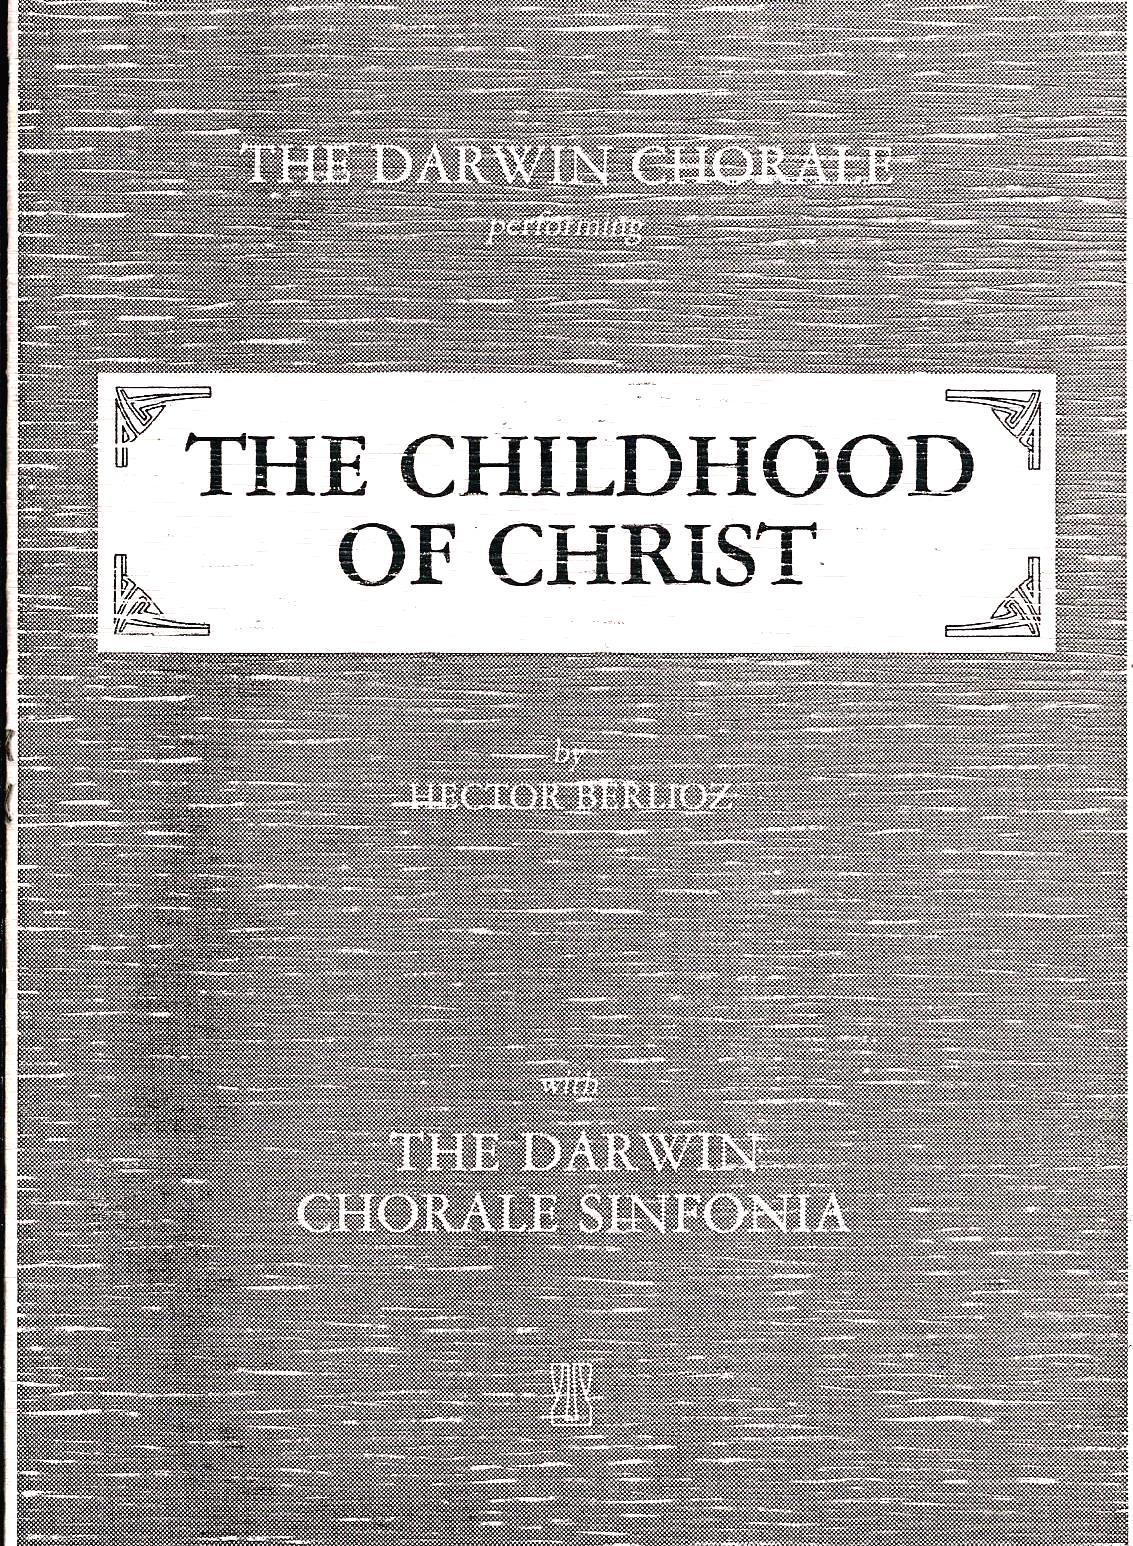 The Childhood of Christ 1986